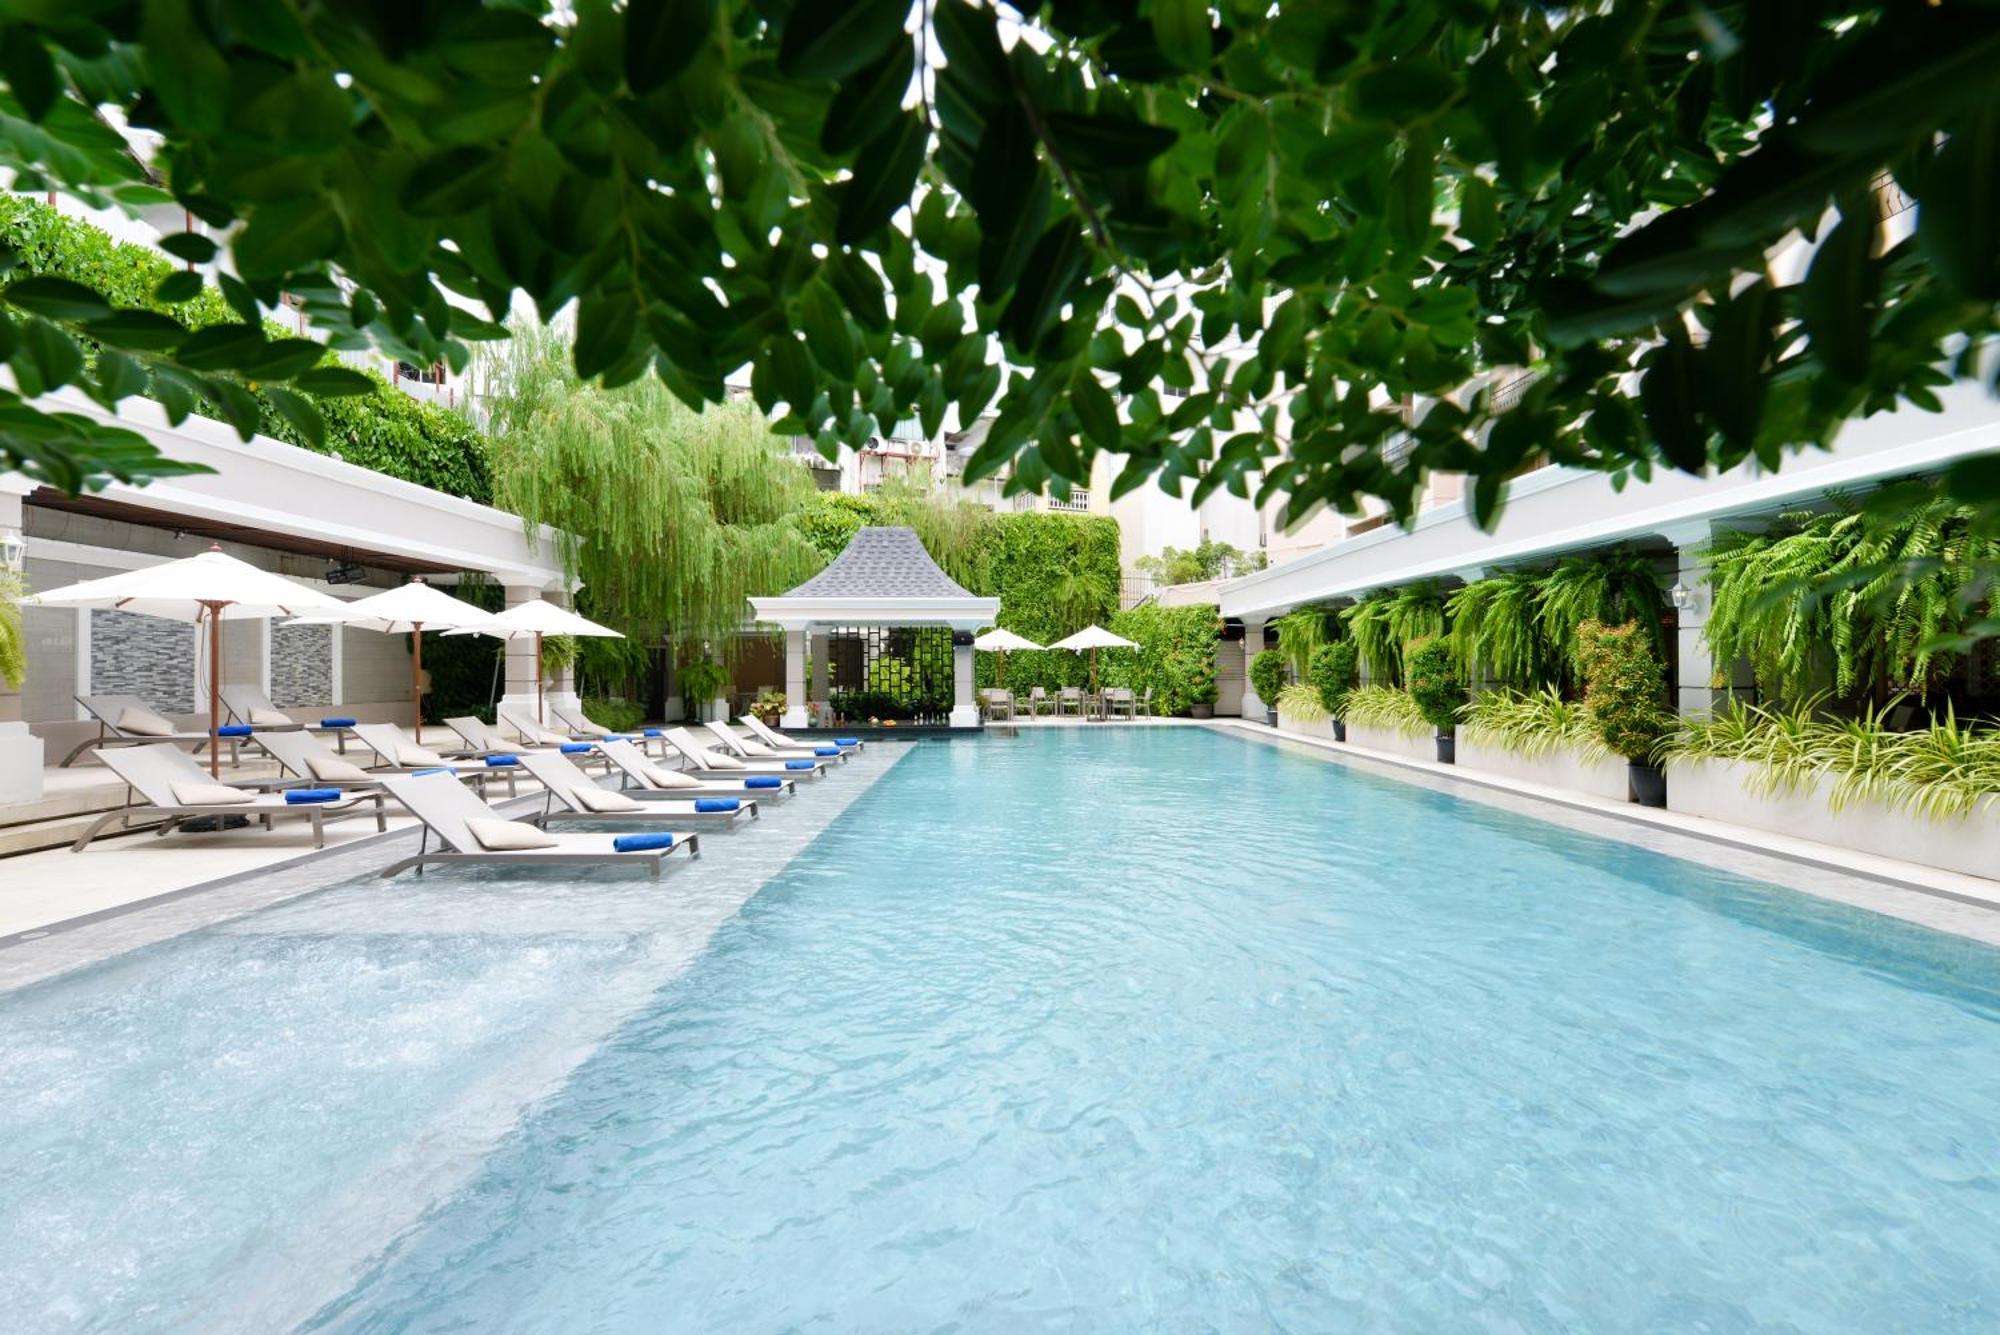 The Beverly Hotel Pattaya Exterior foto